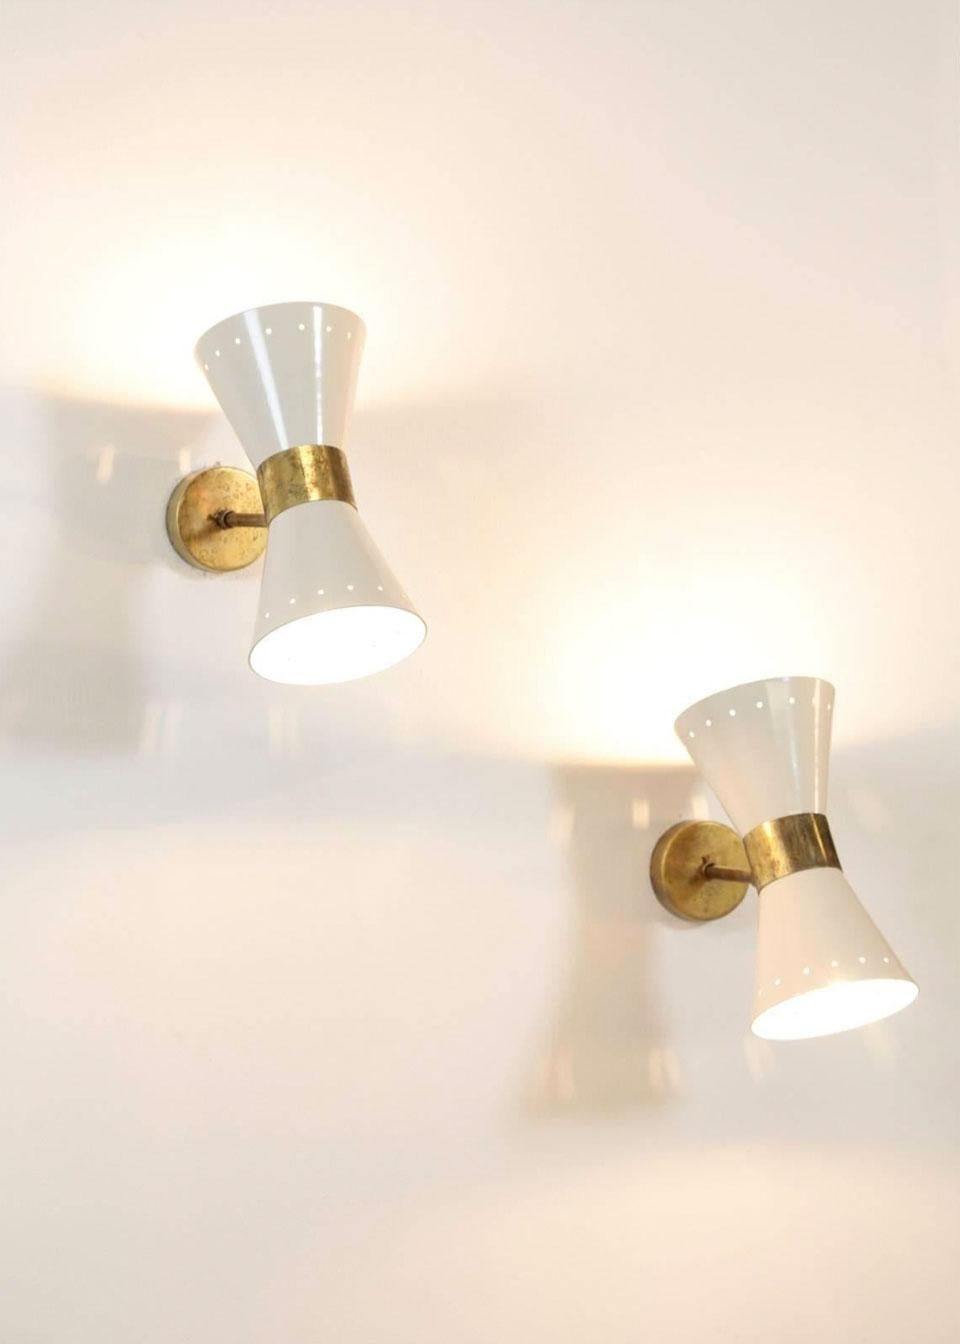 Mid-20th Century 1 of 6 Italian Modern Design Wall Light Sconces Stilnovo Style Ivory White Brass